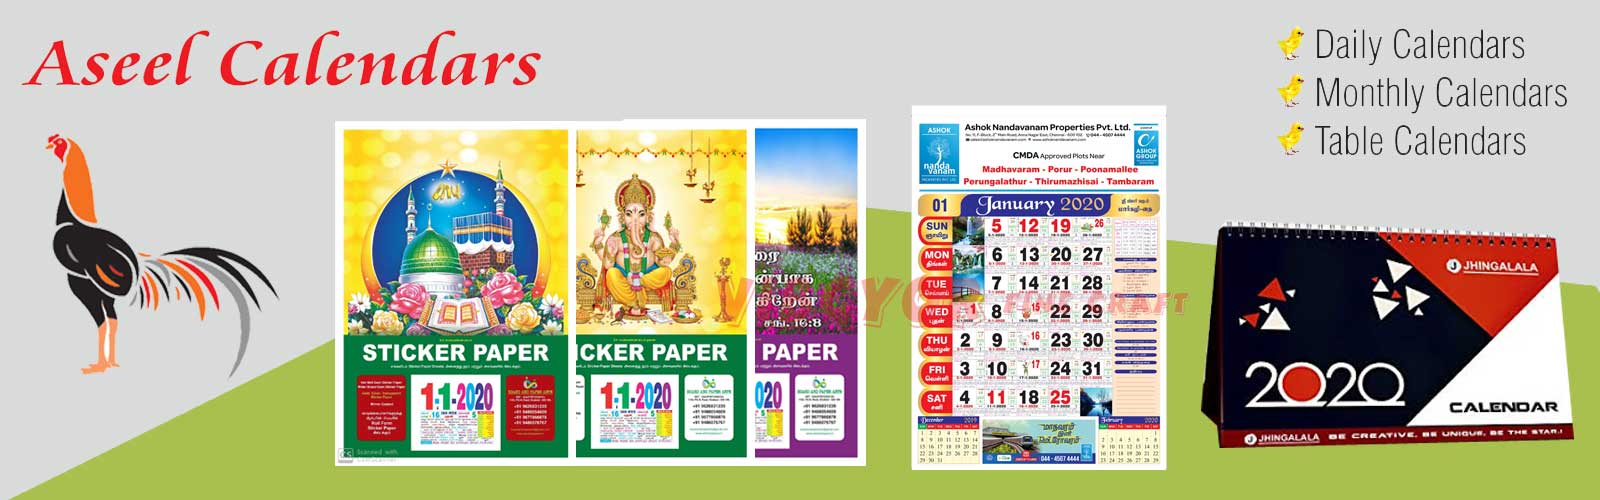 Aseel Calendars